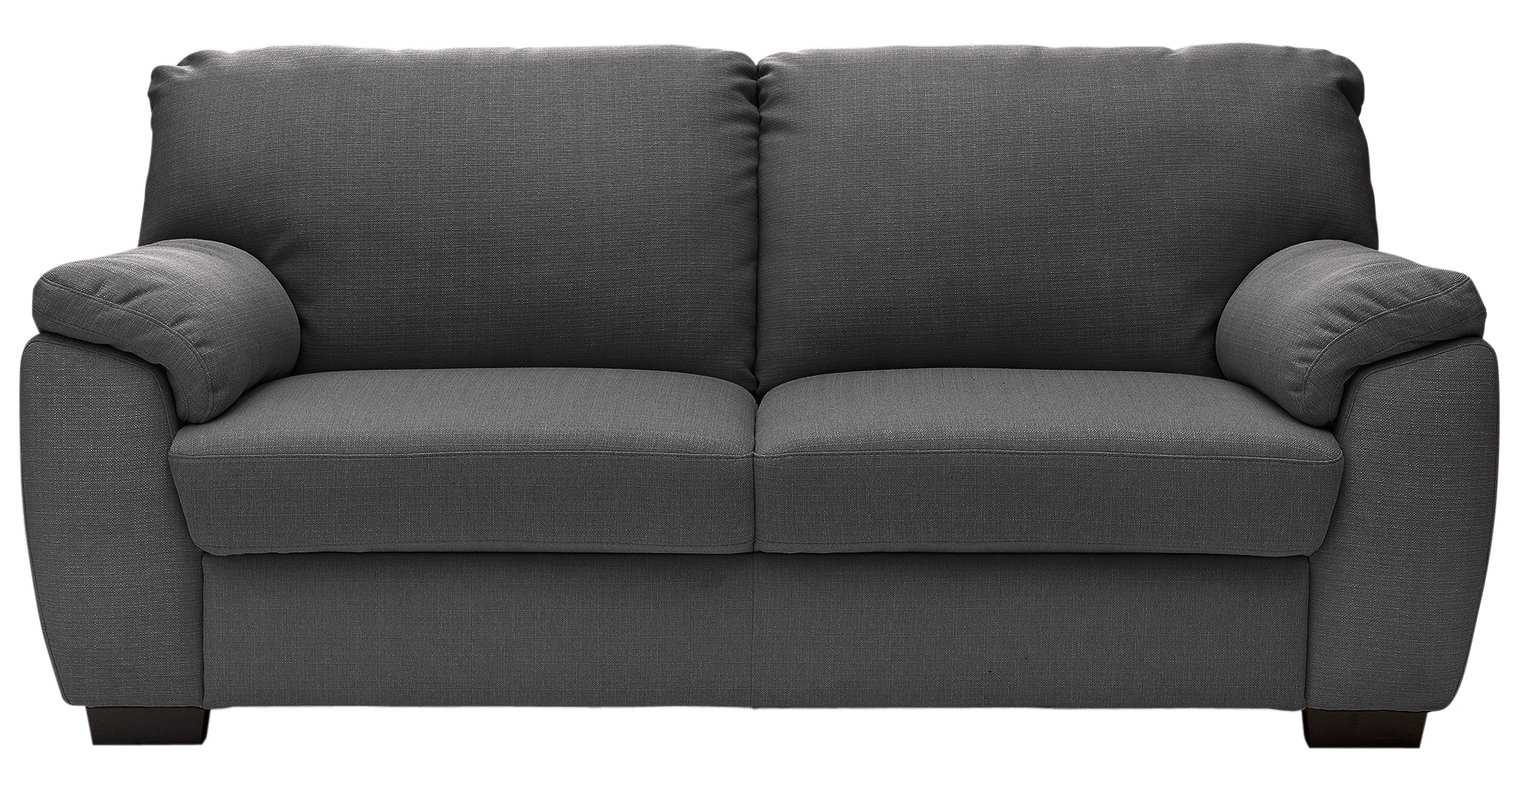 Argos Home Milano Fabric 3 Seater Sofa - Charcoal